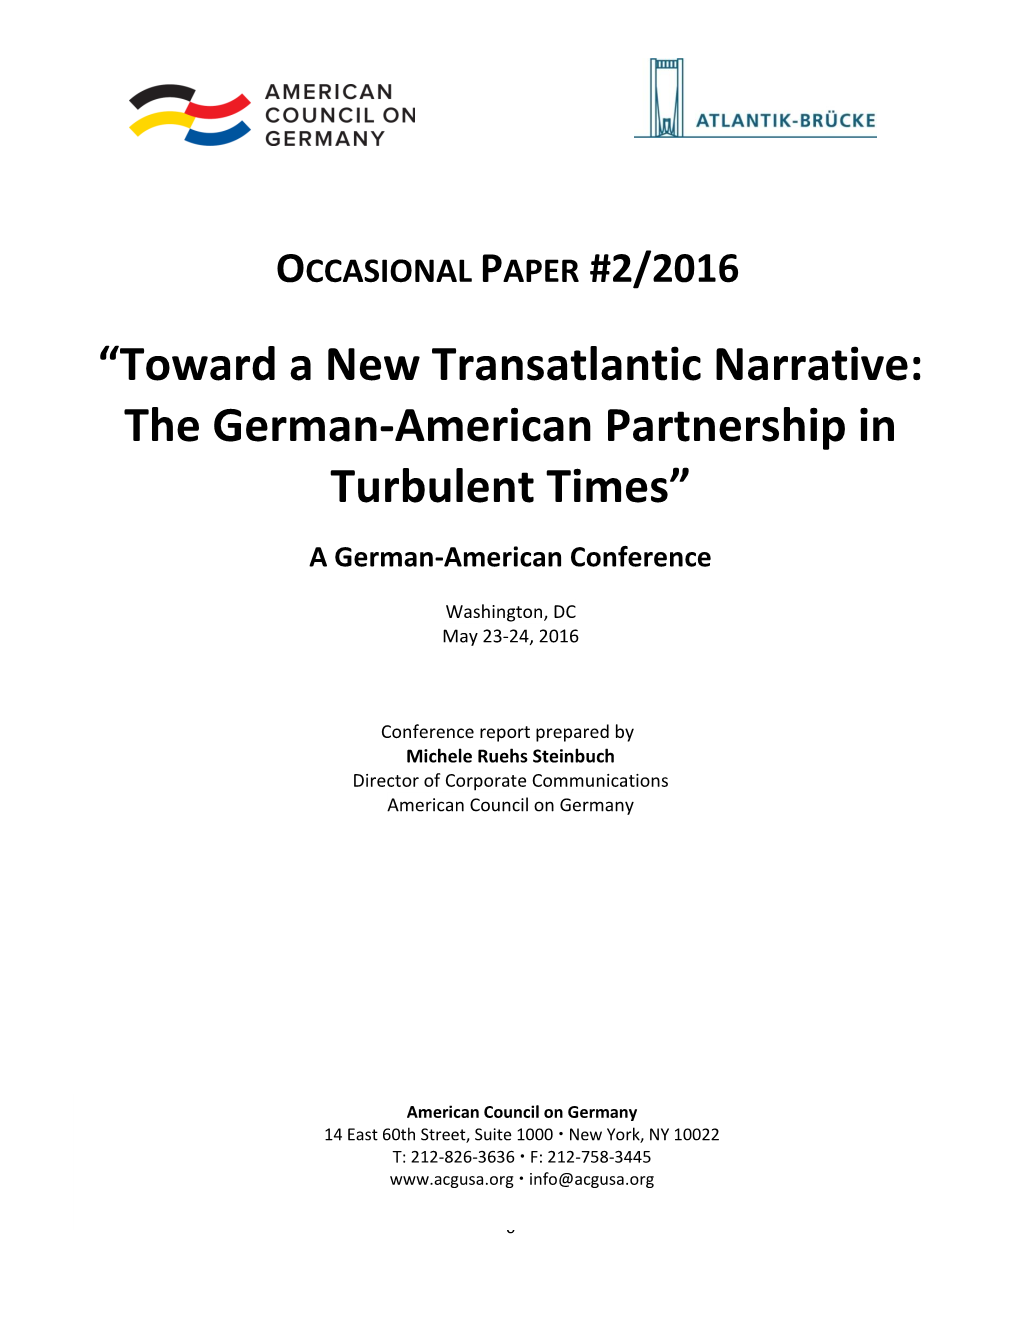 Toward a New Transatlantic Narrative: the German-American Partnership in Turbulent Times”